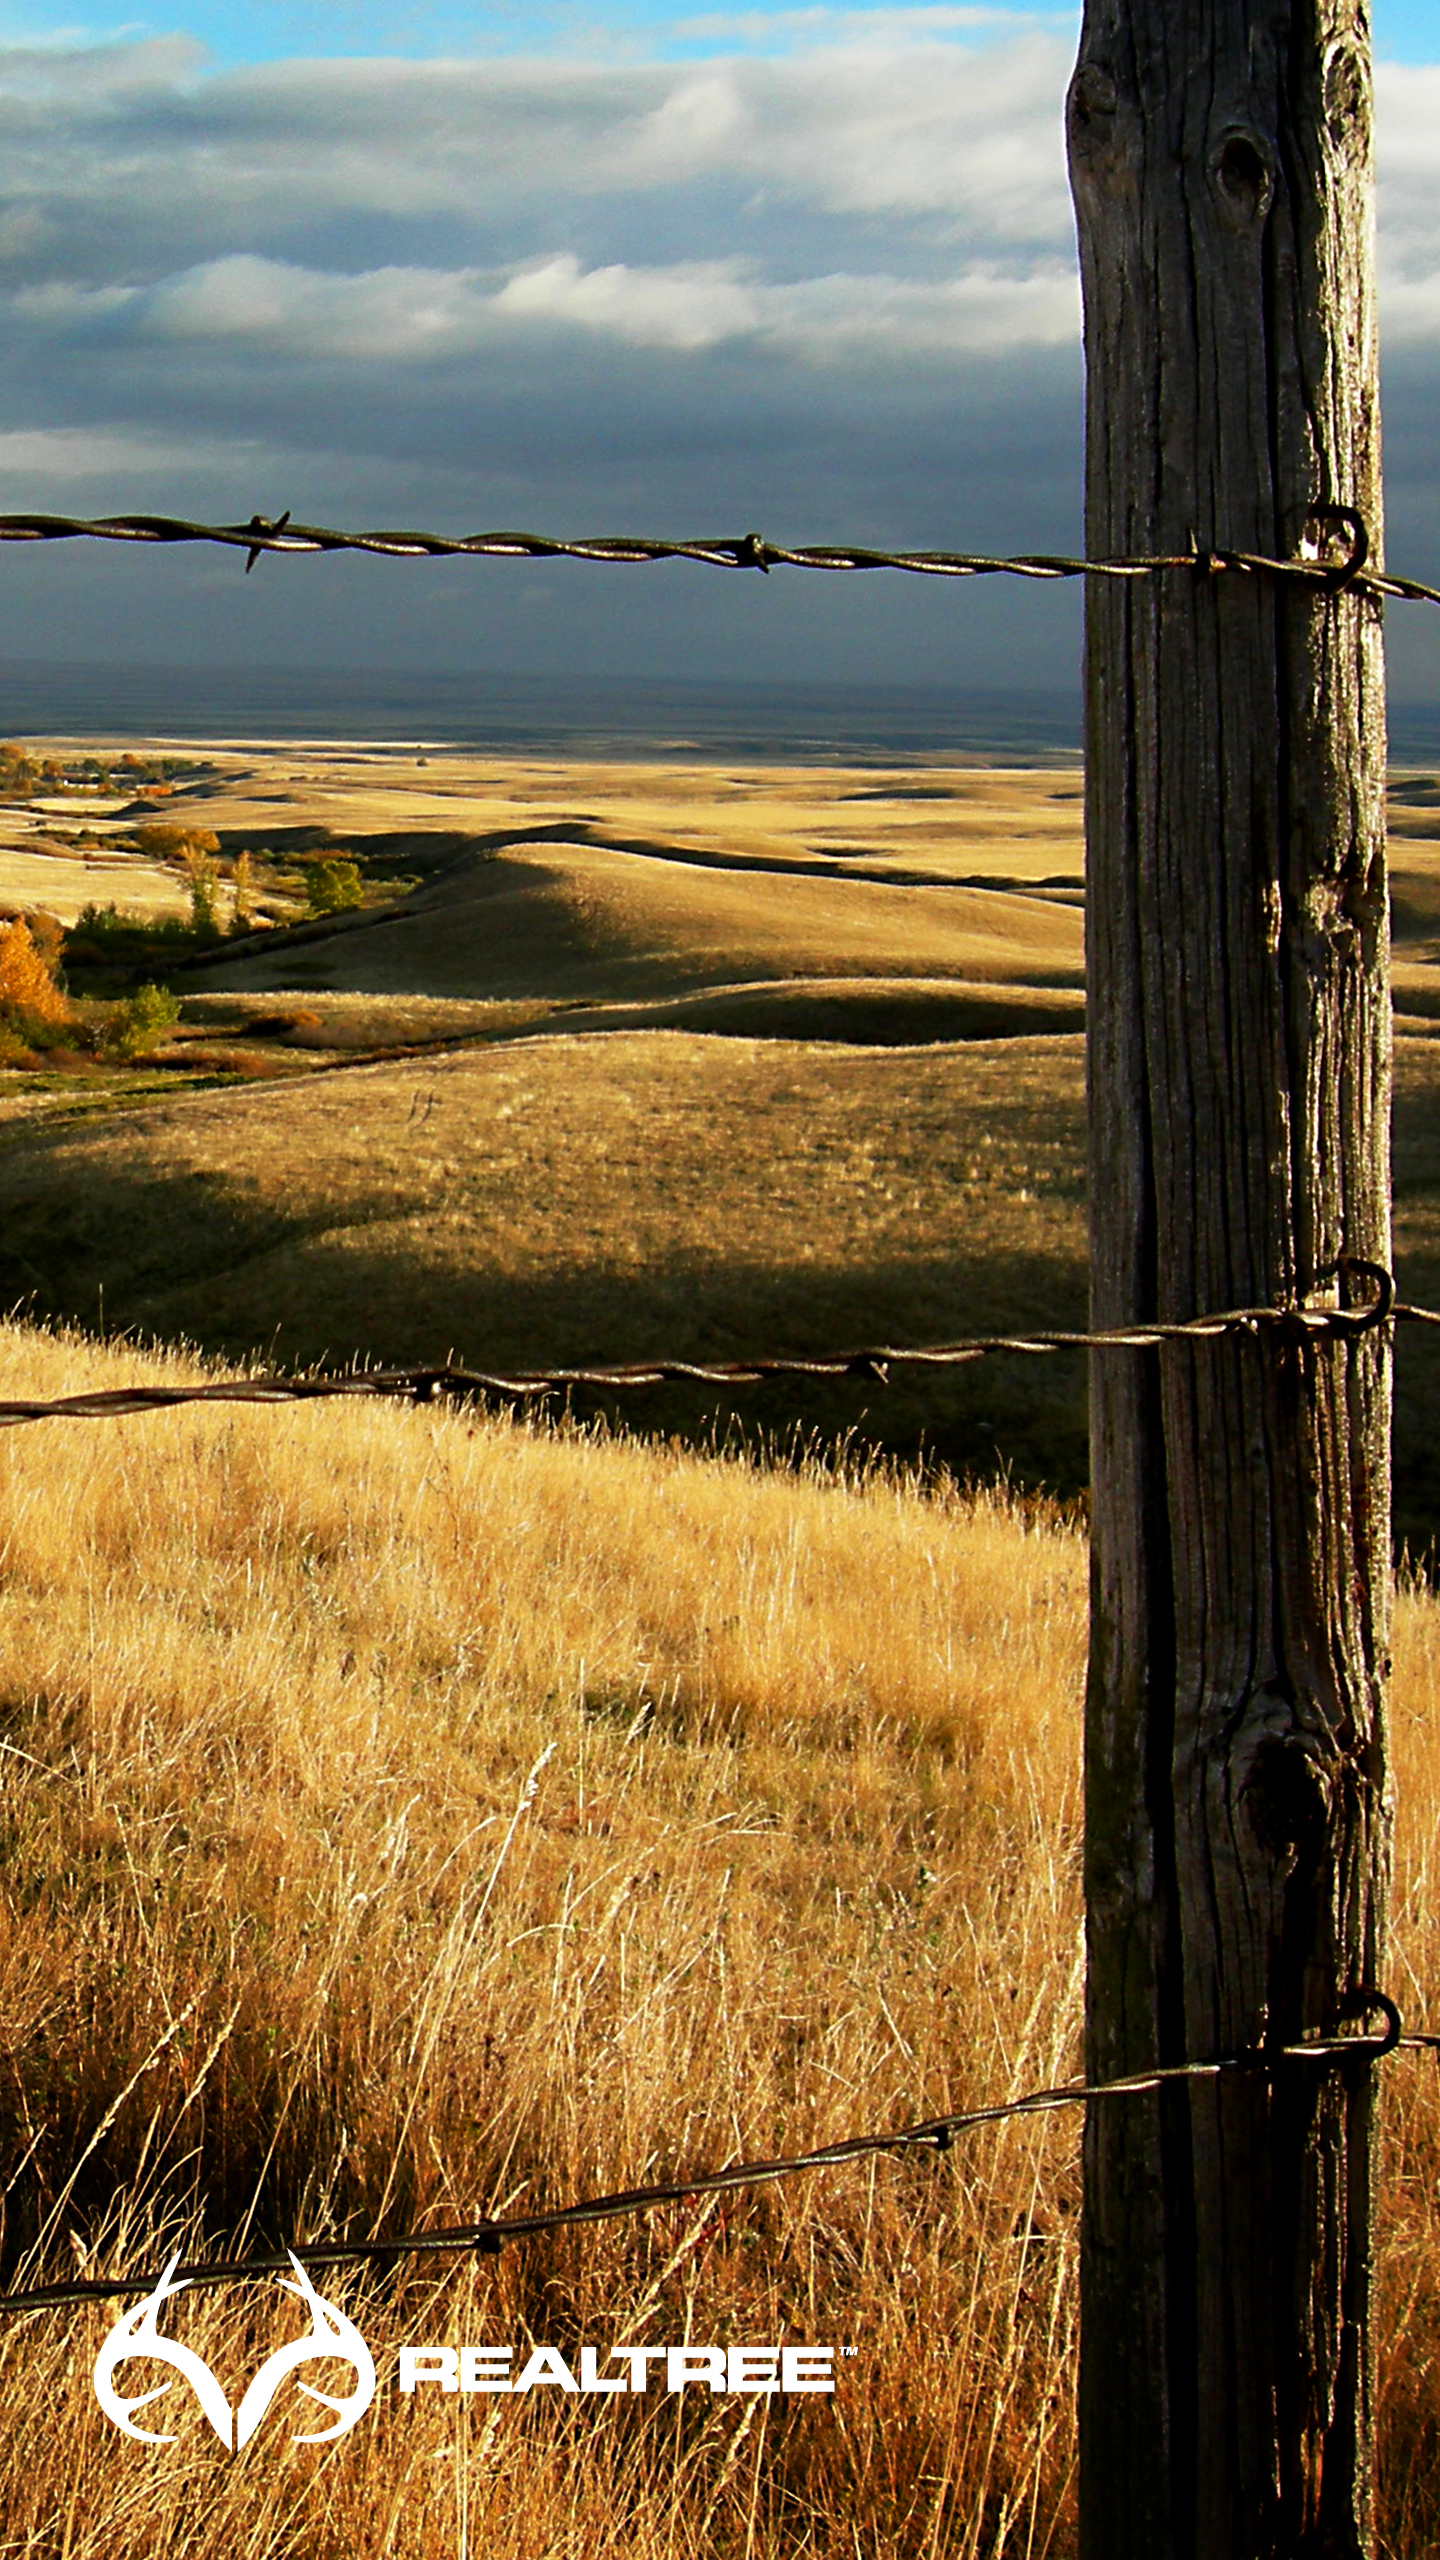 realtree iphone wallpaper,natural landscape,nature,sky,grassland,fence